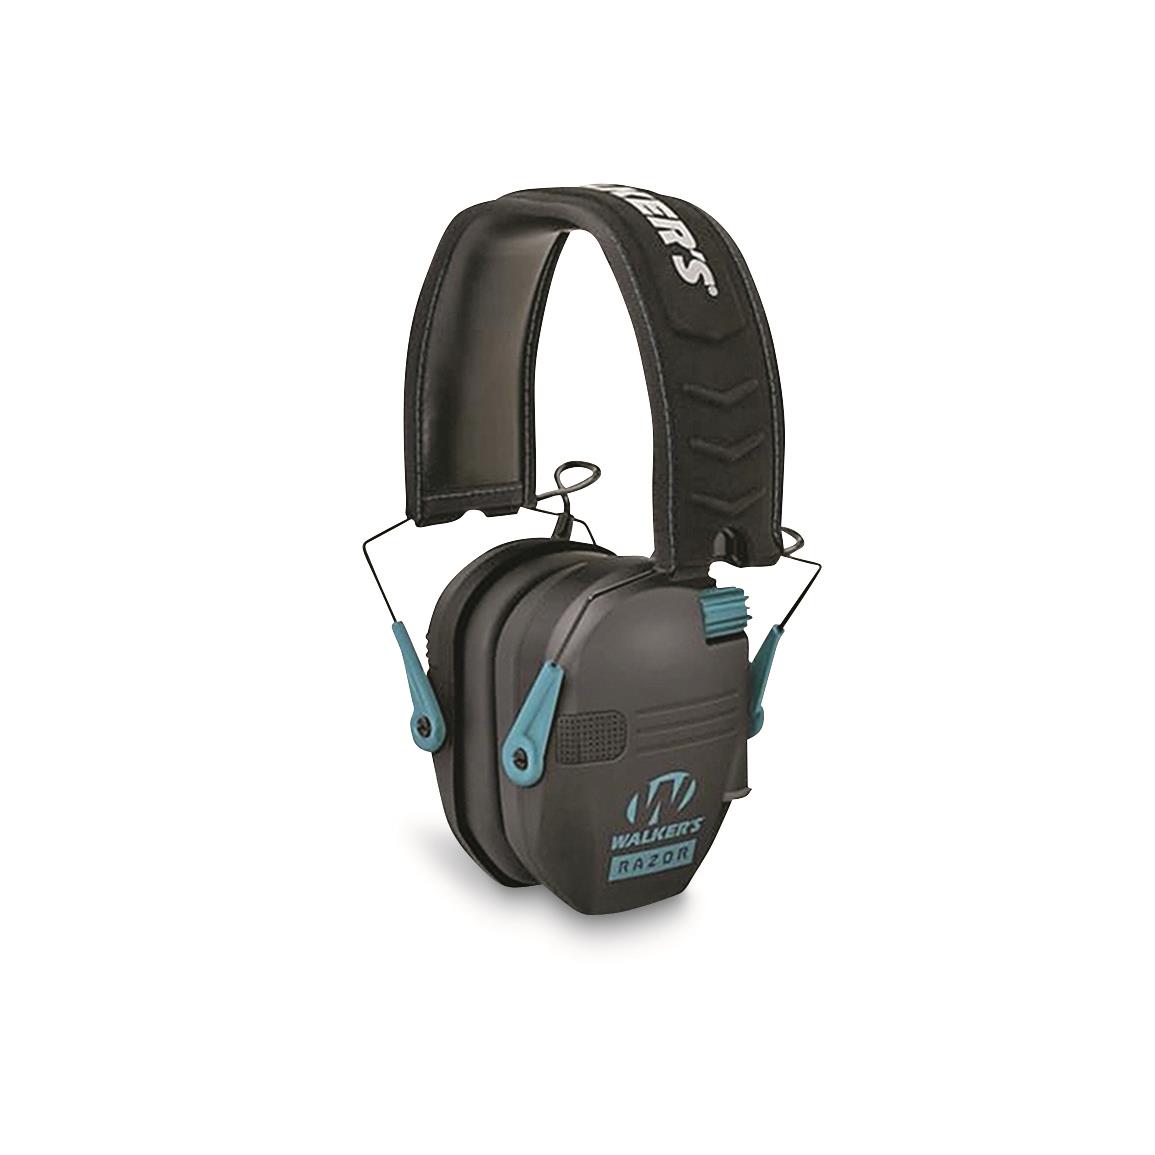 Walker’s Razor Slim GWP Electronic Hearing Protection & Sound Amp Ear Muffs 